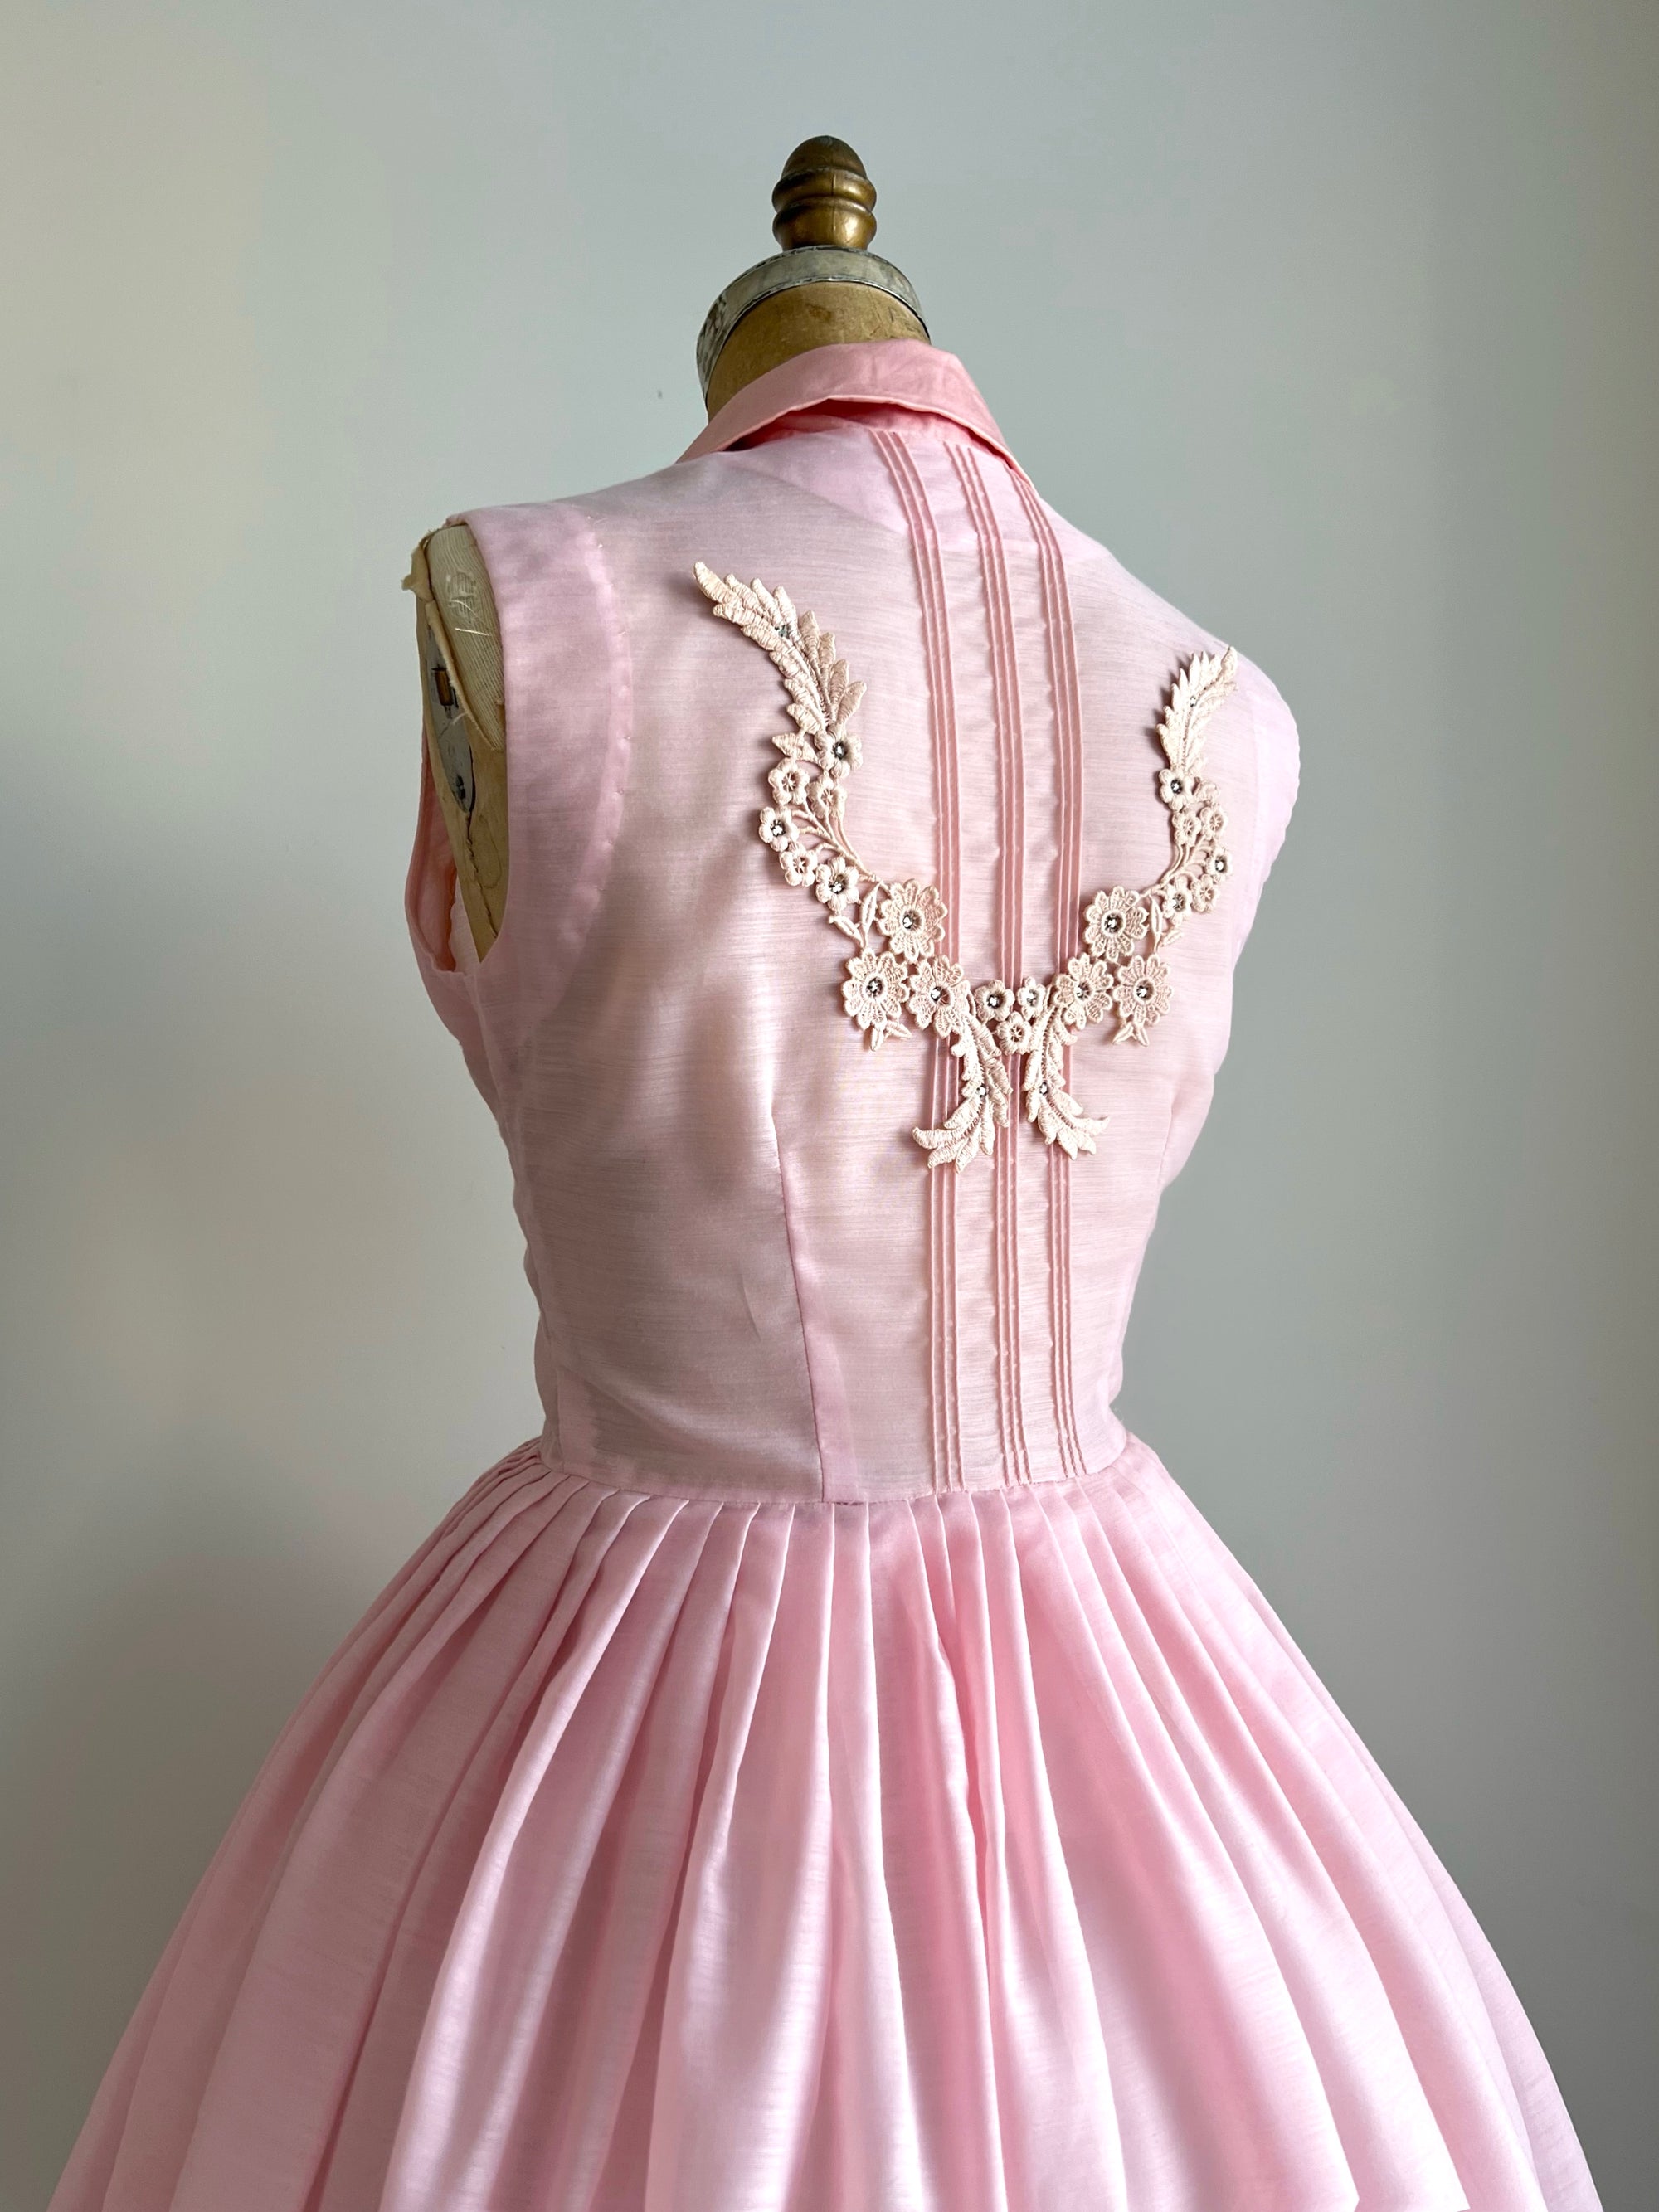 1950s 50s Pink Appliqué Dress - Medium